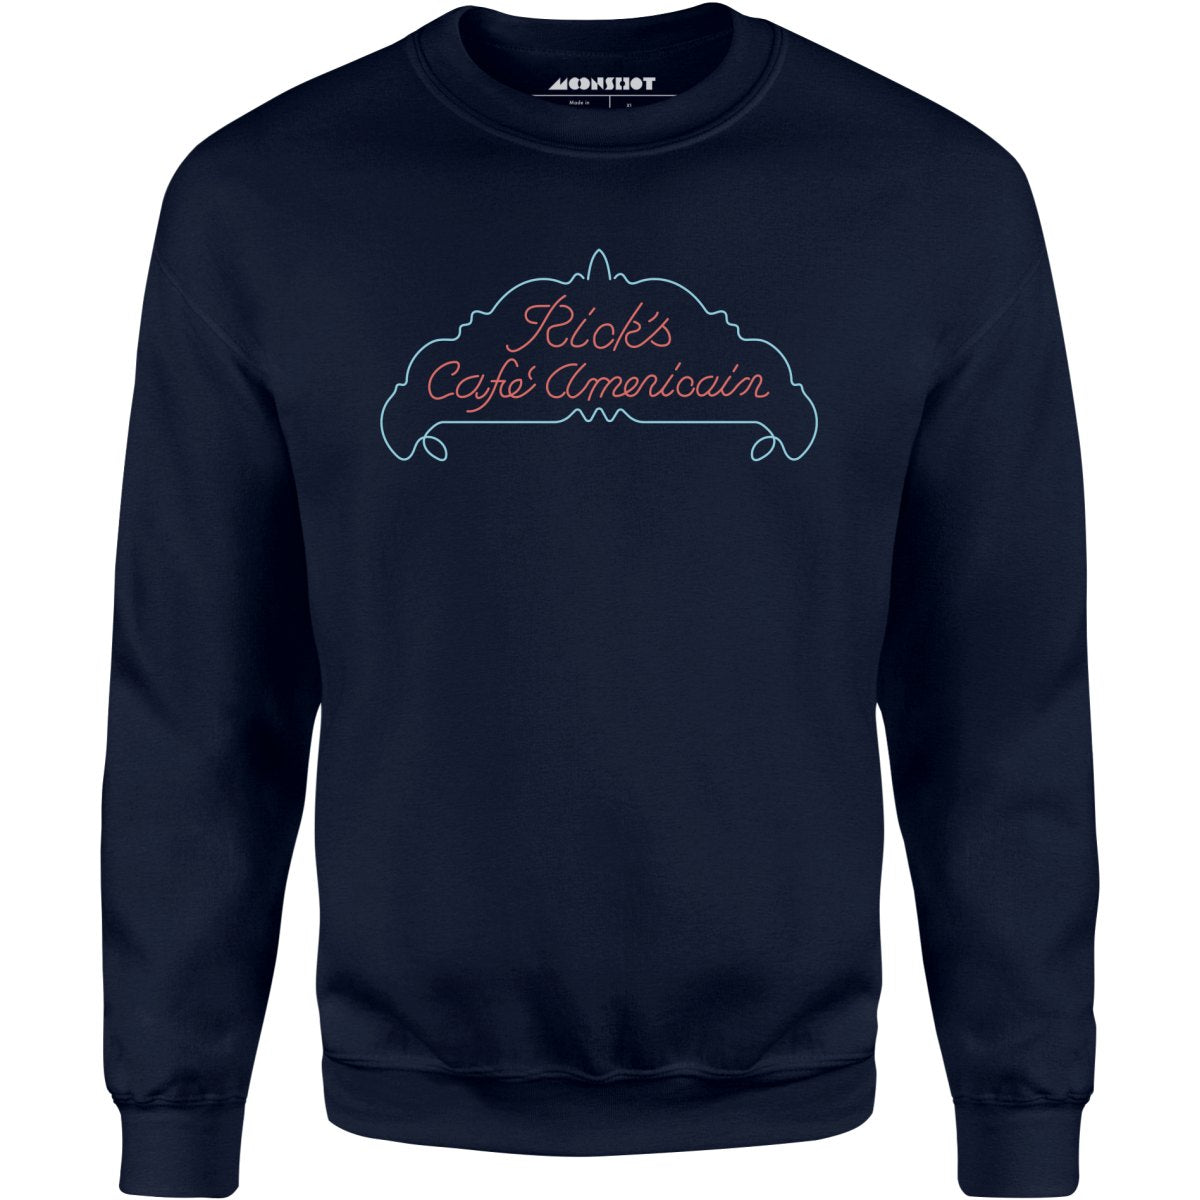 Casablanca - Rick's Cafe Americain - Unisex Sweatshirt